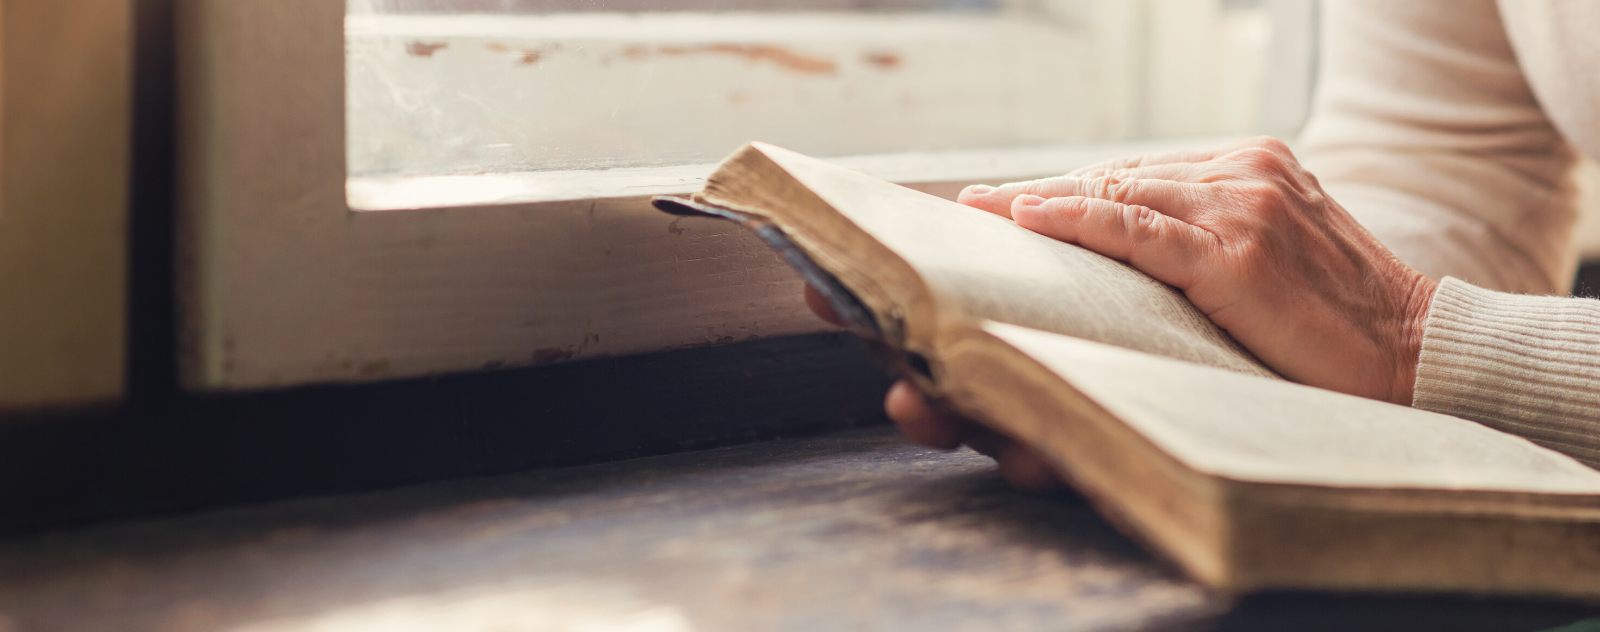 How to memorize Bible verses?